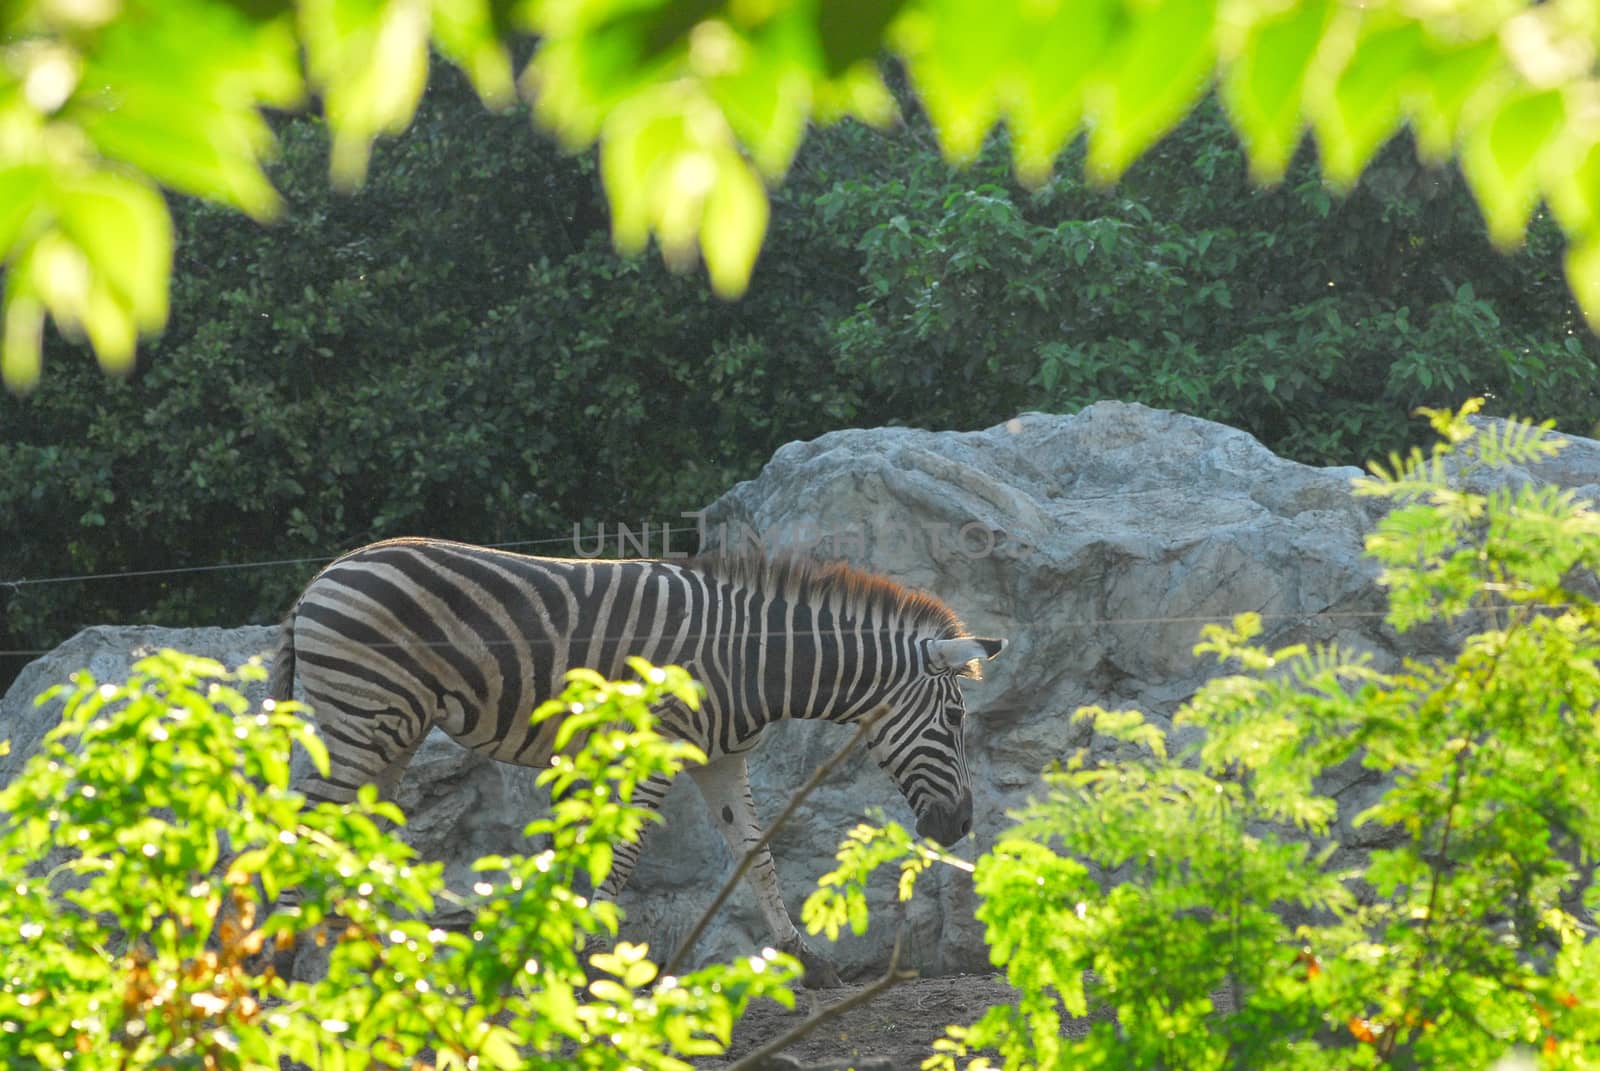 Zebra behind bush by think4photop